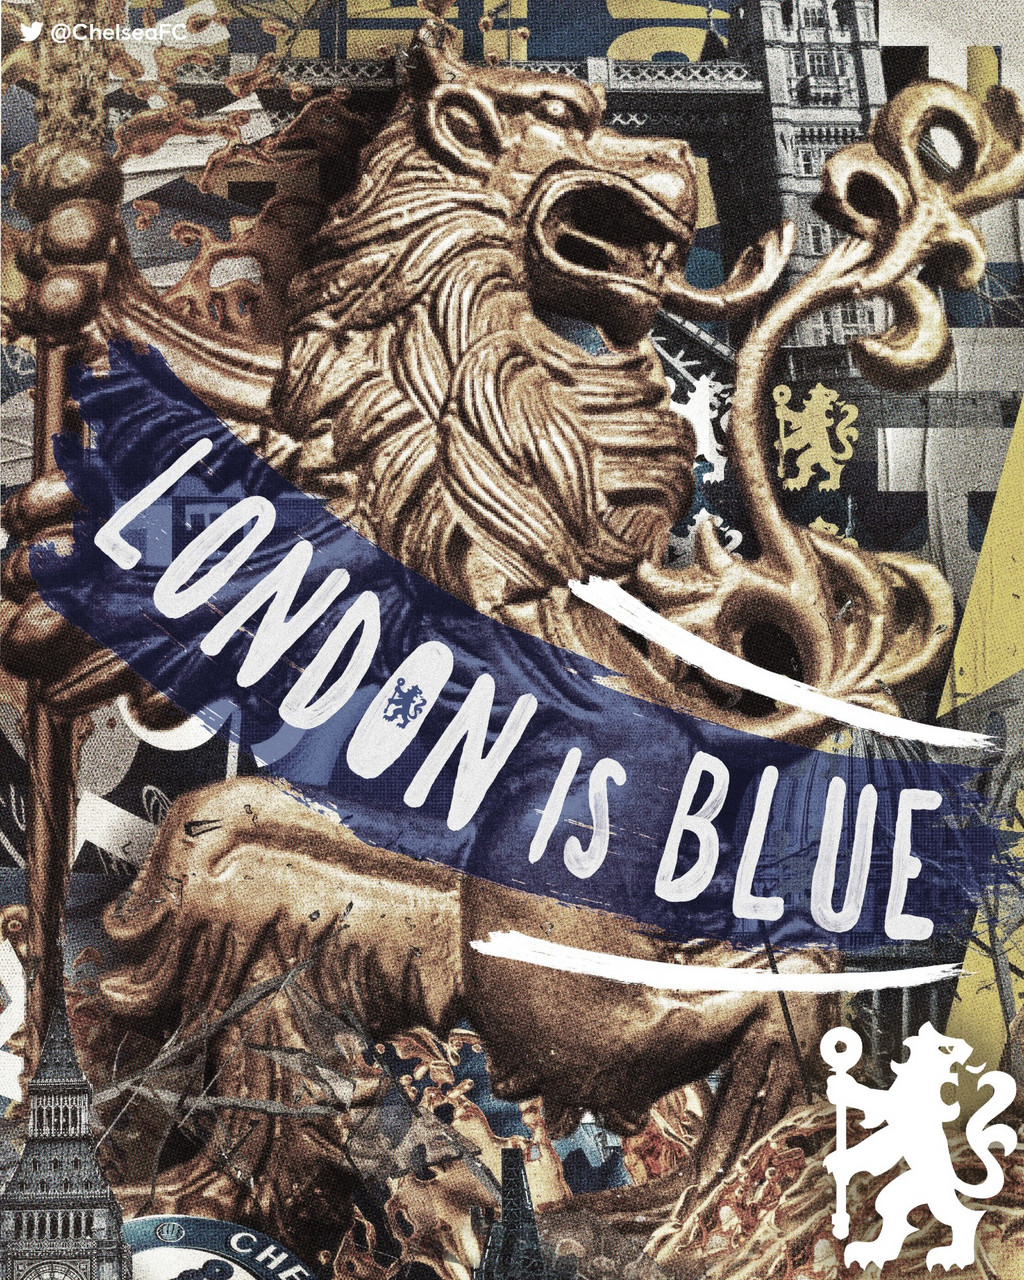 Londres se tiñó de azul